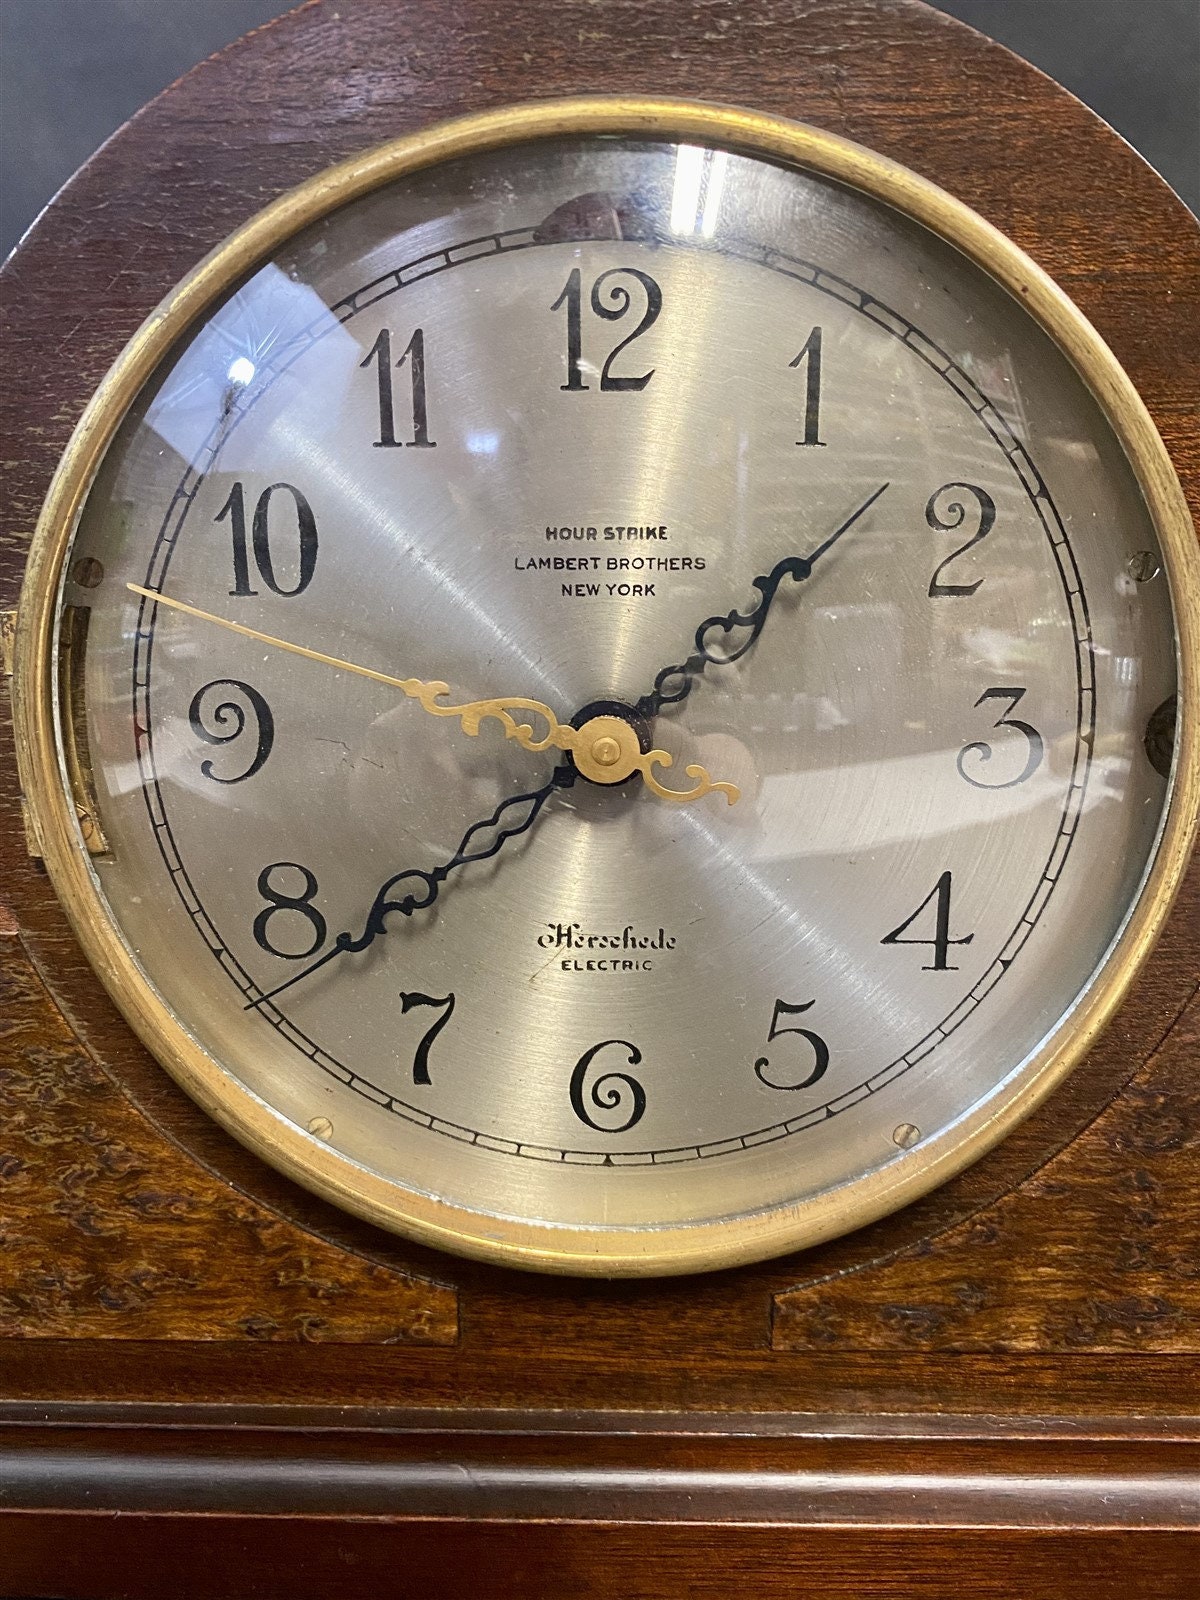 Reloj de repisa eléctrico Lambert Brothers Telechron antiguo de